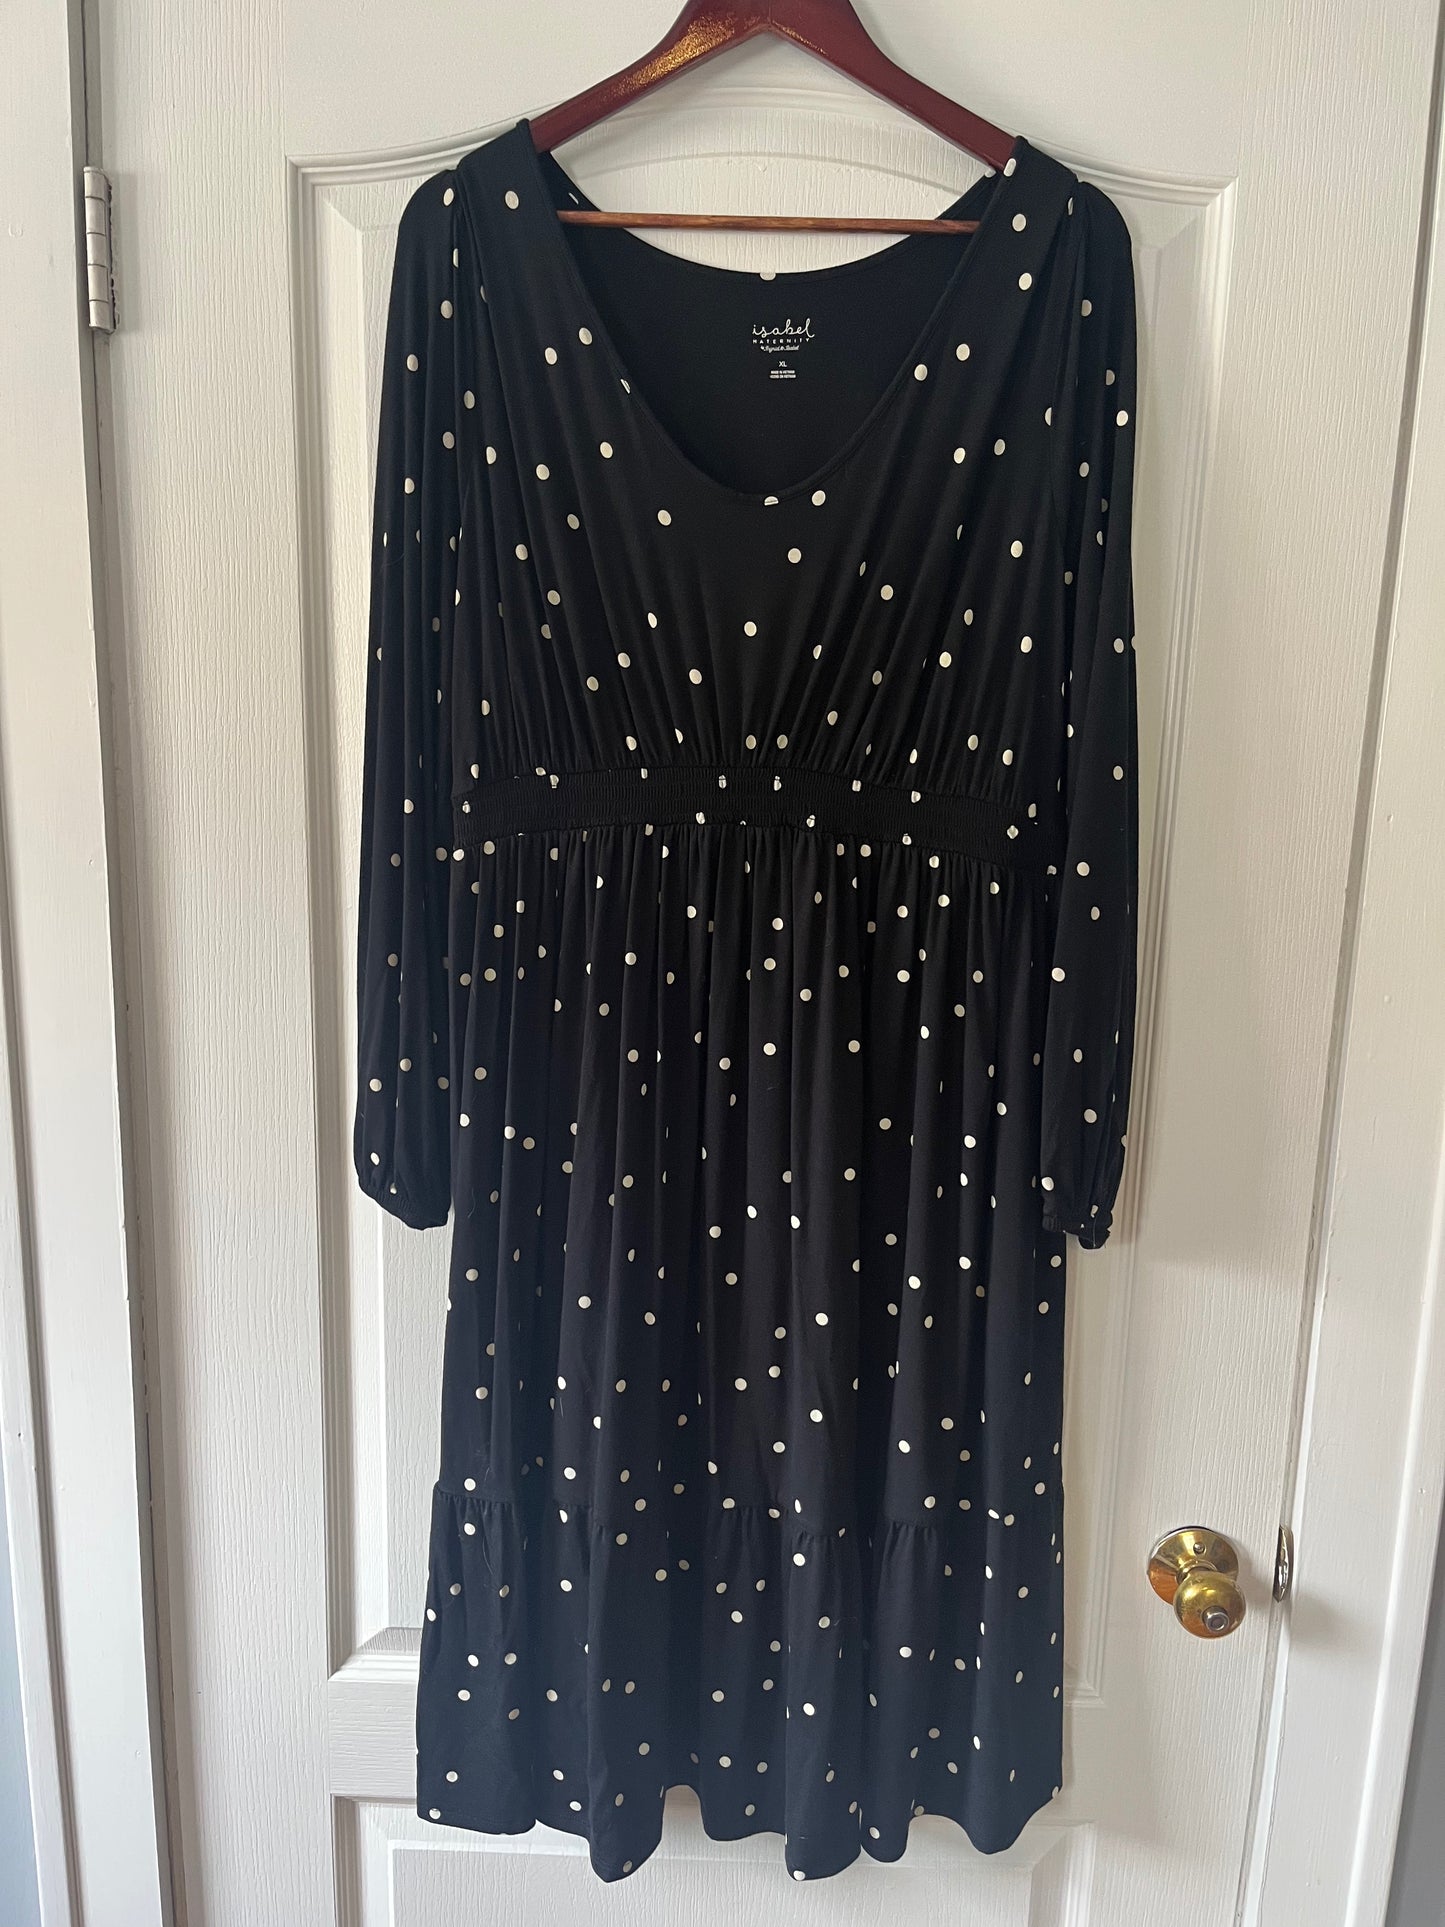 Isabel Maternity Black Dress with Walk Polka Dots - Size XL - NWOTs